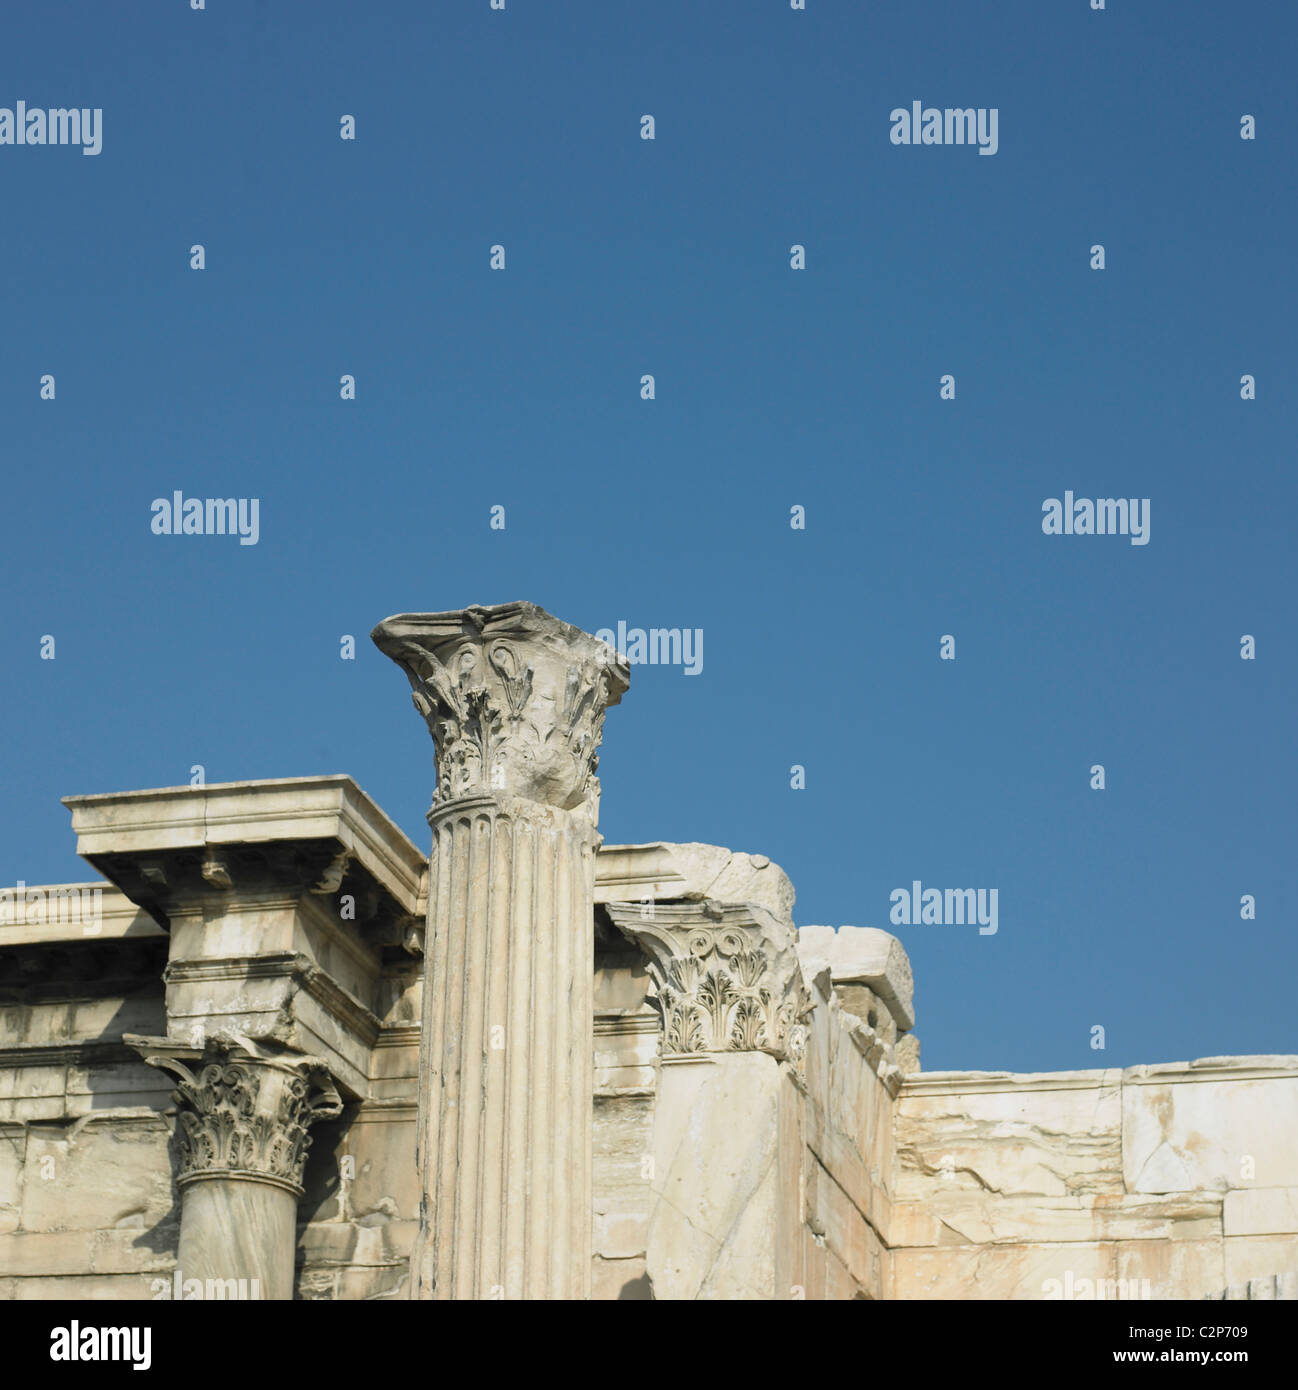 Athens Acropolis, columns and capitals. Stock Photo